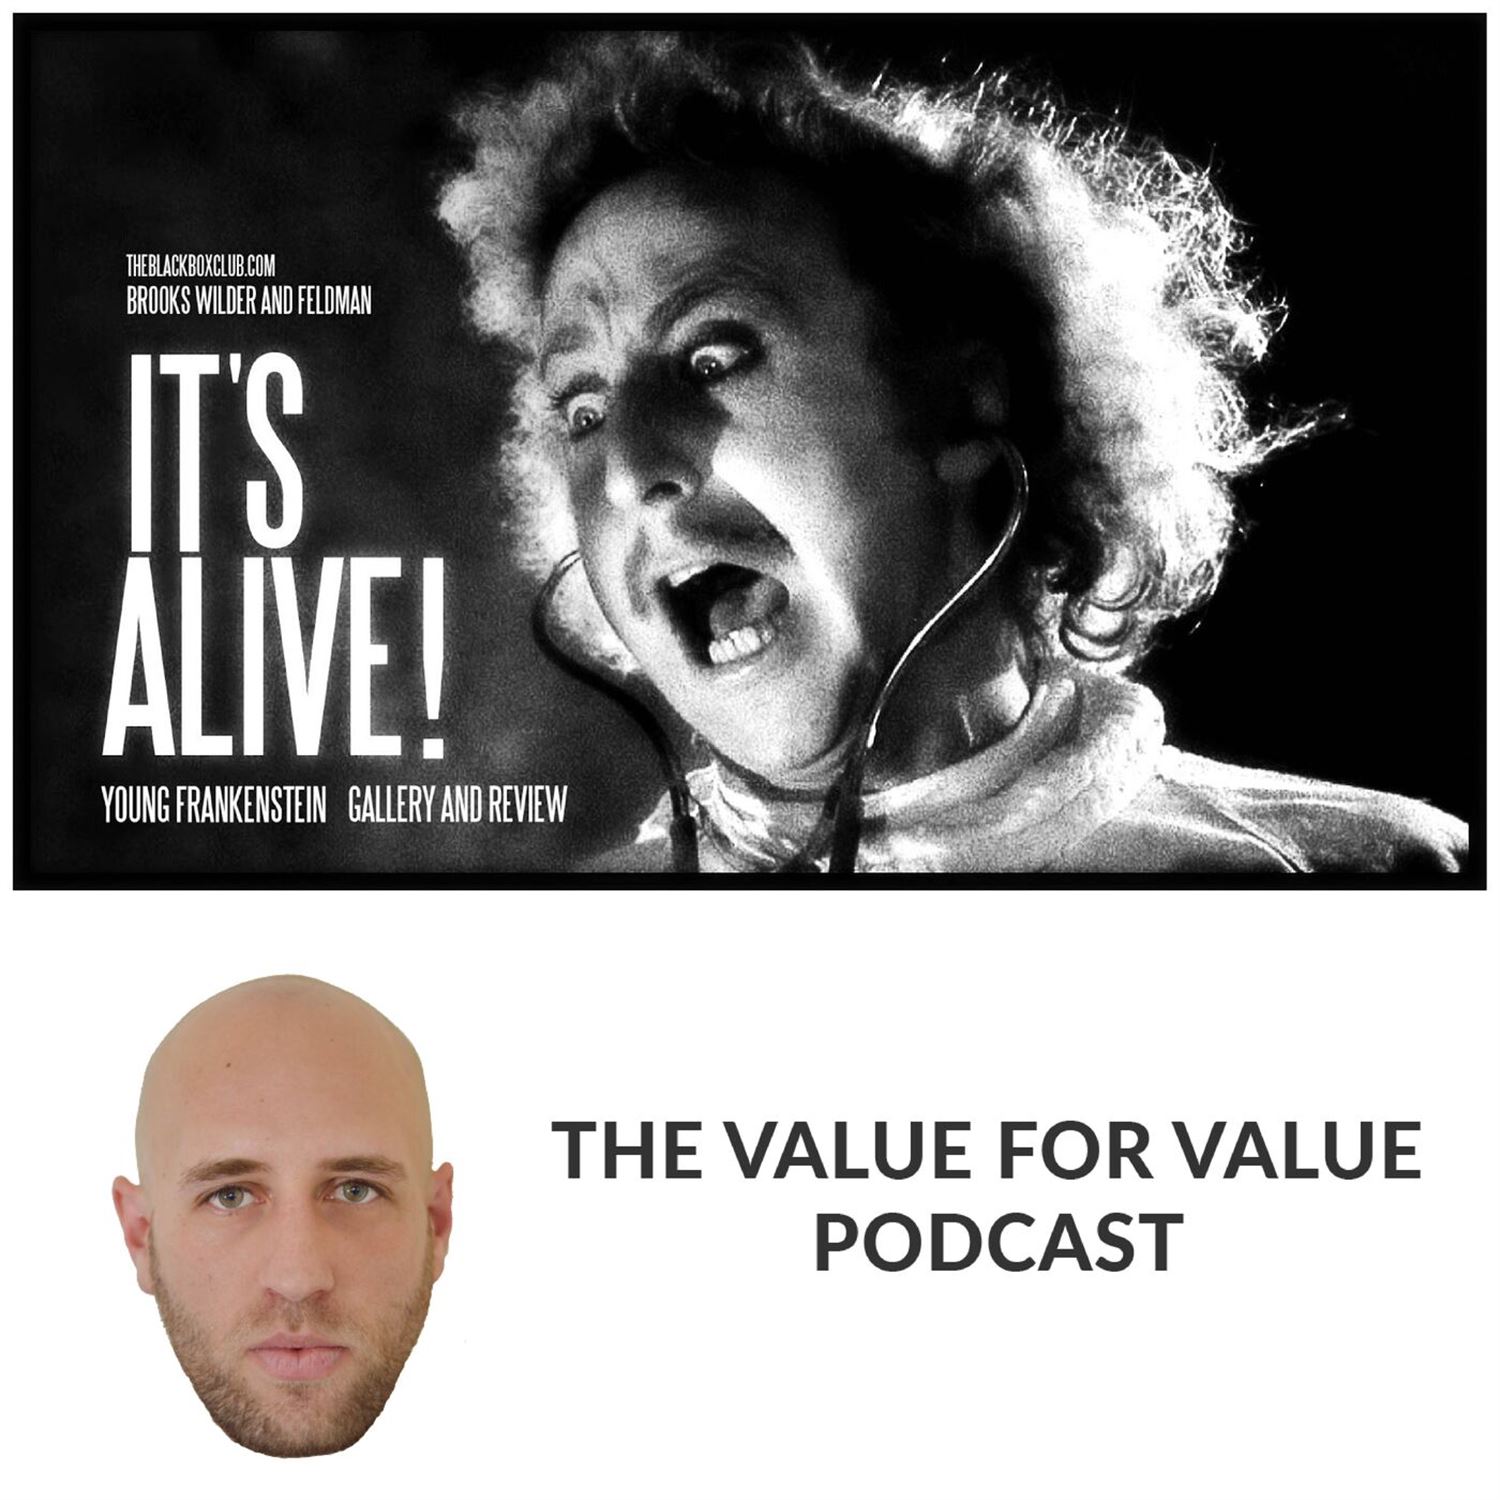 The rebirth of the V4V podcast